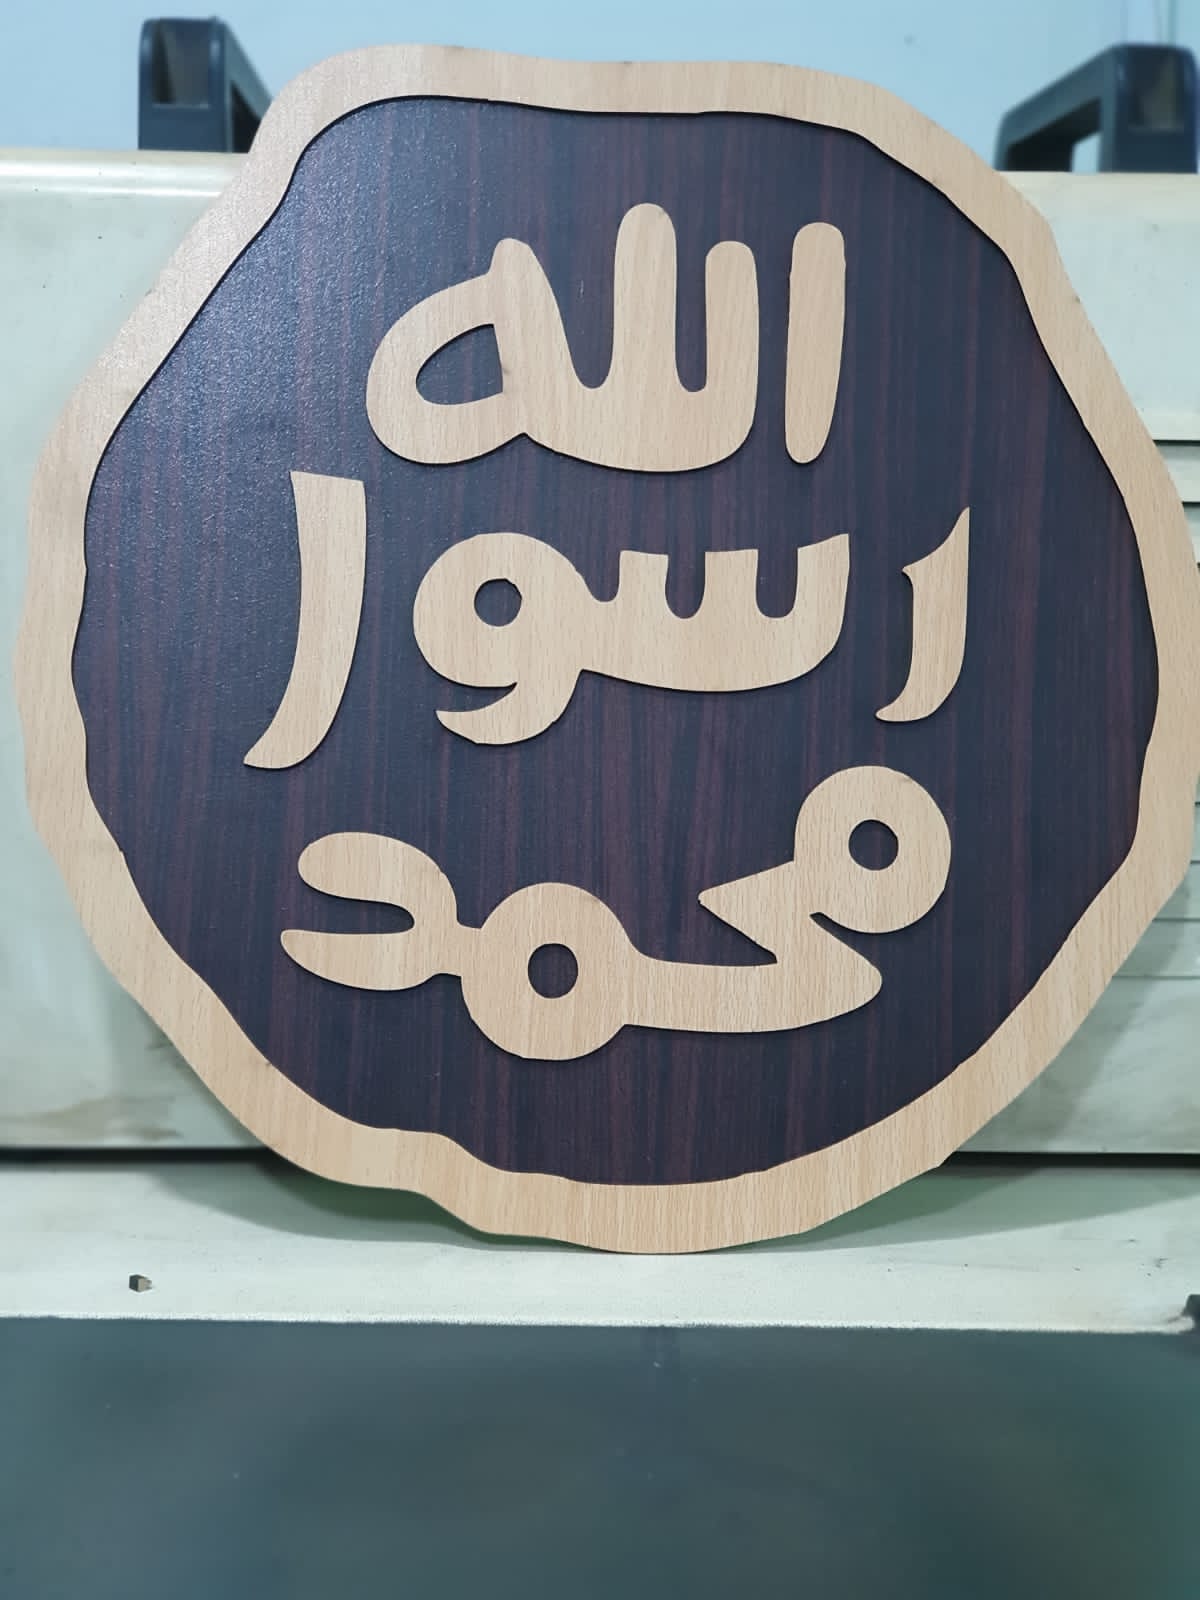 (Allah rasool muhammad )Islamic Wall decorations Wooden material 15×15 inch size